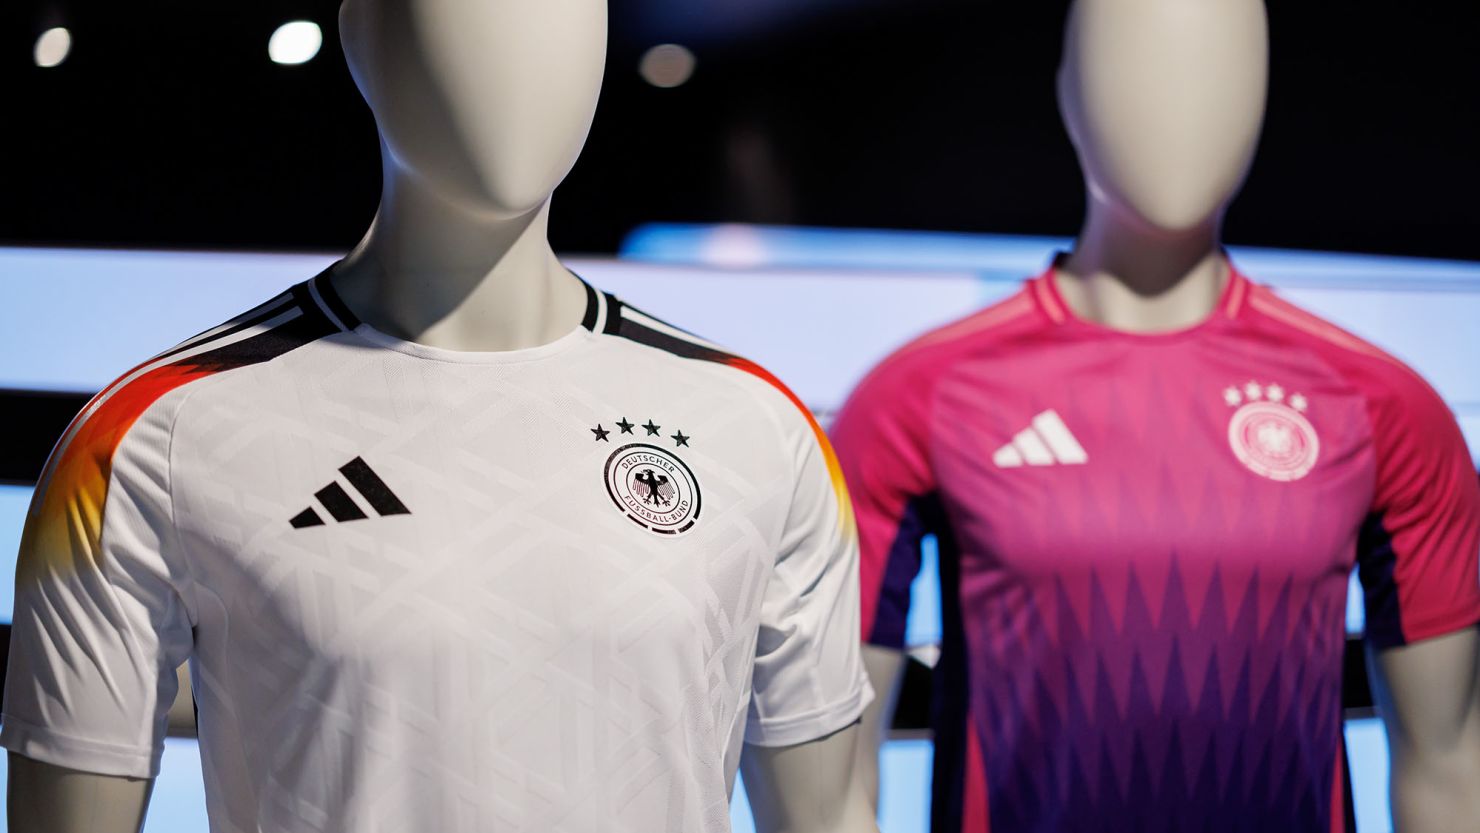 German national teams end long Adidas partnership with Nike deal - ESPN